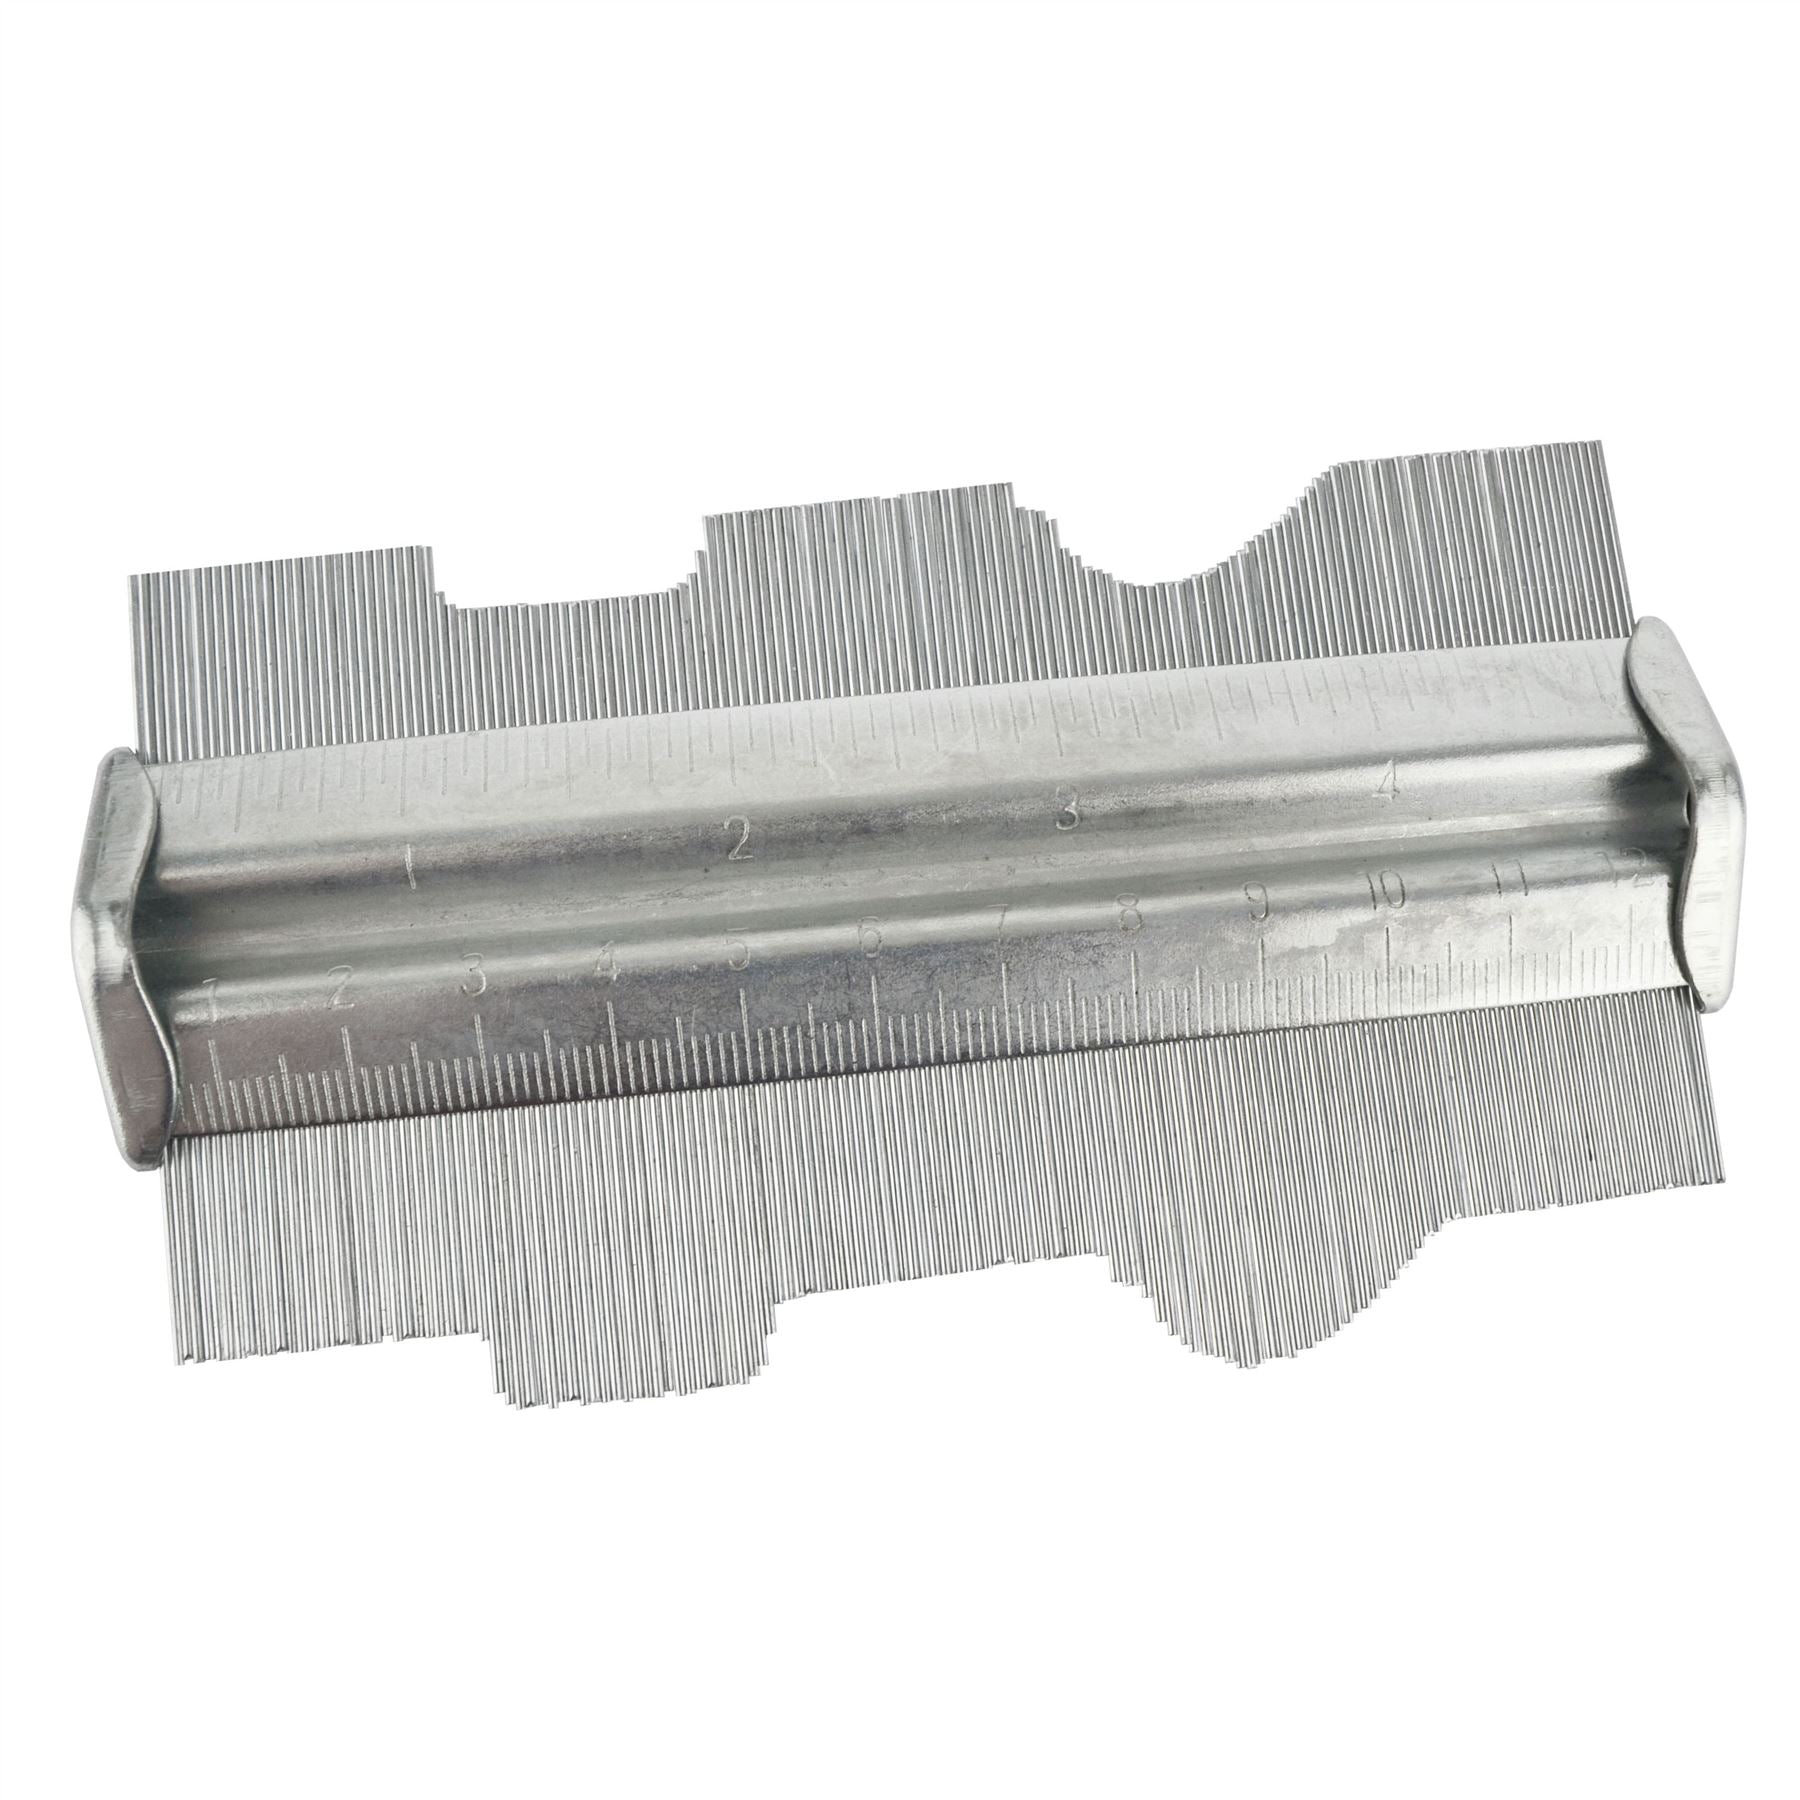 125mm 5" Metal Professional Contour Profile Gauge Tiling Laminate Tiles TE394